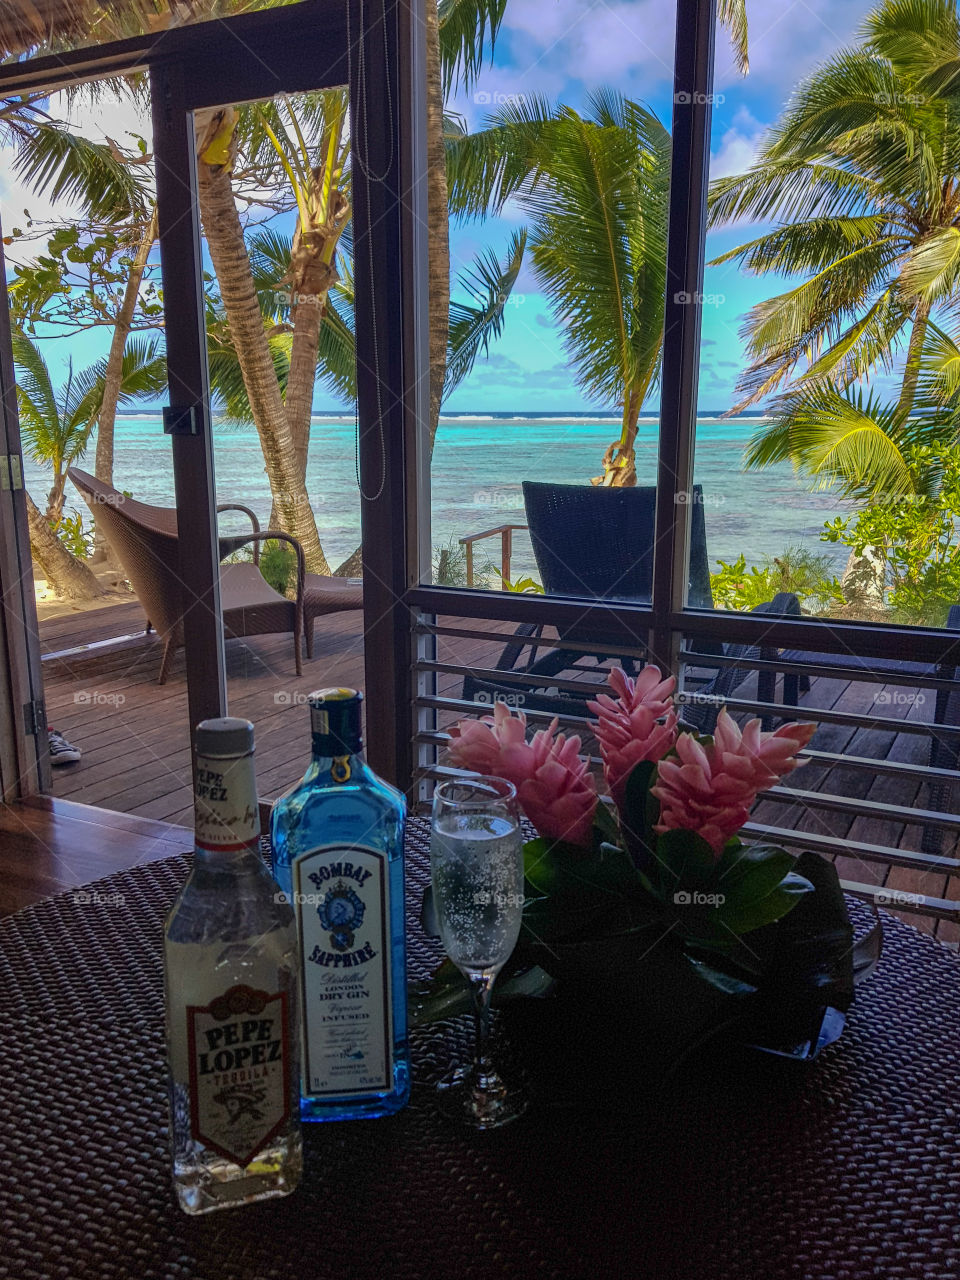 enjoy the day at little polynesian resort